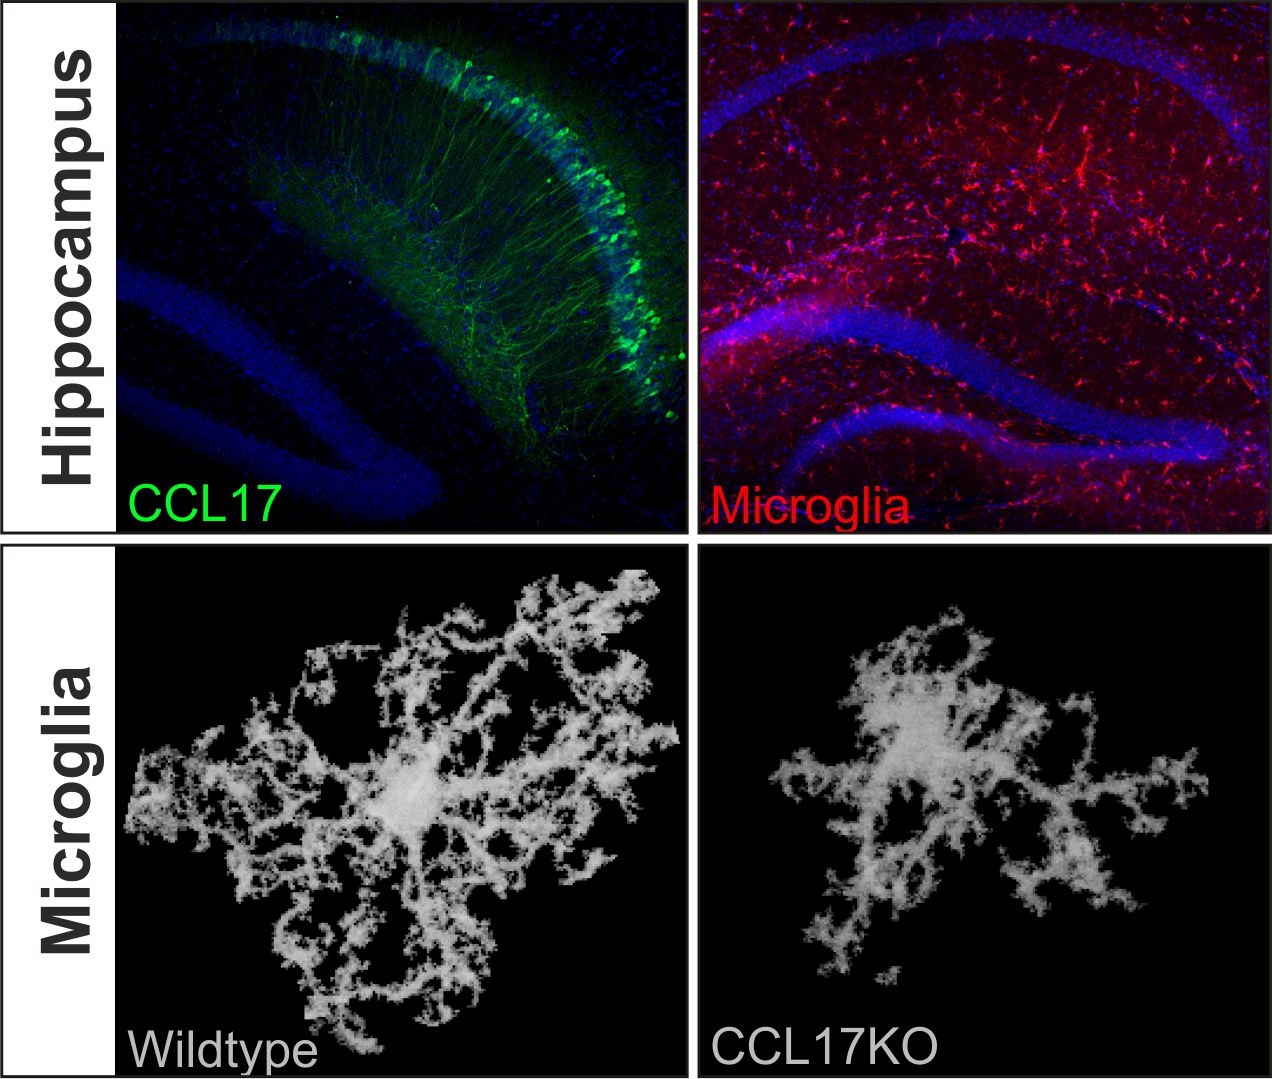 Top: CCL17-producing neurons